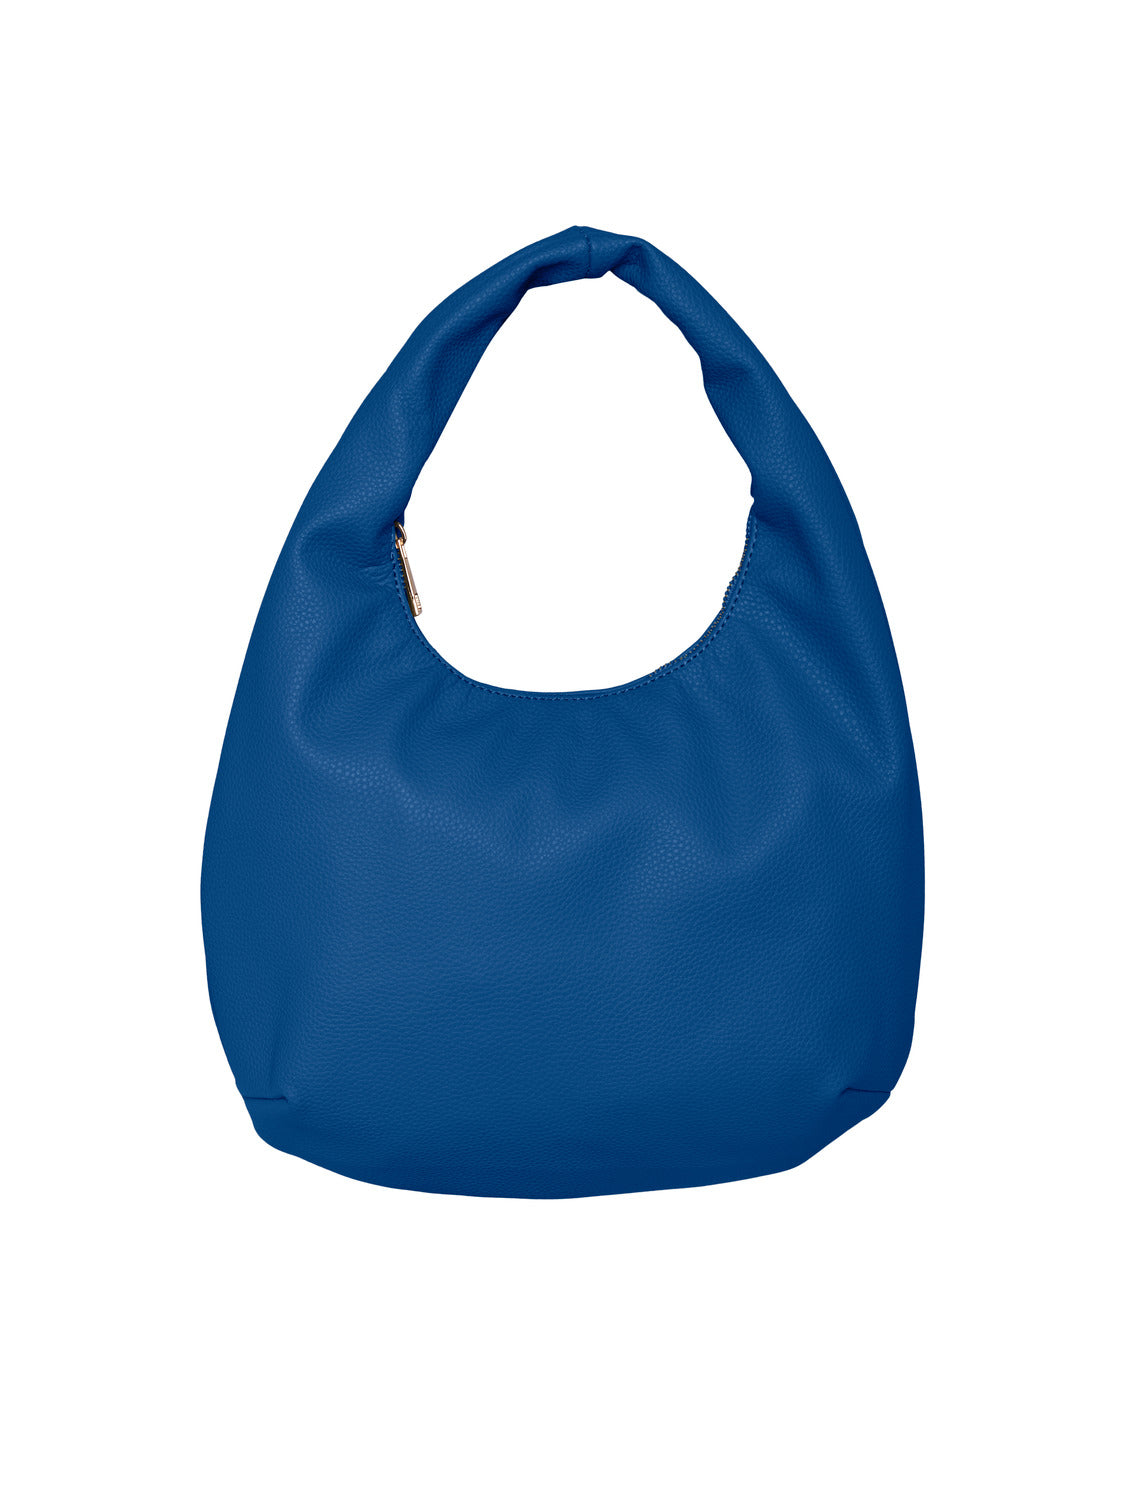 PCKANSA Shopping Bag - Classic Blue